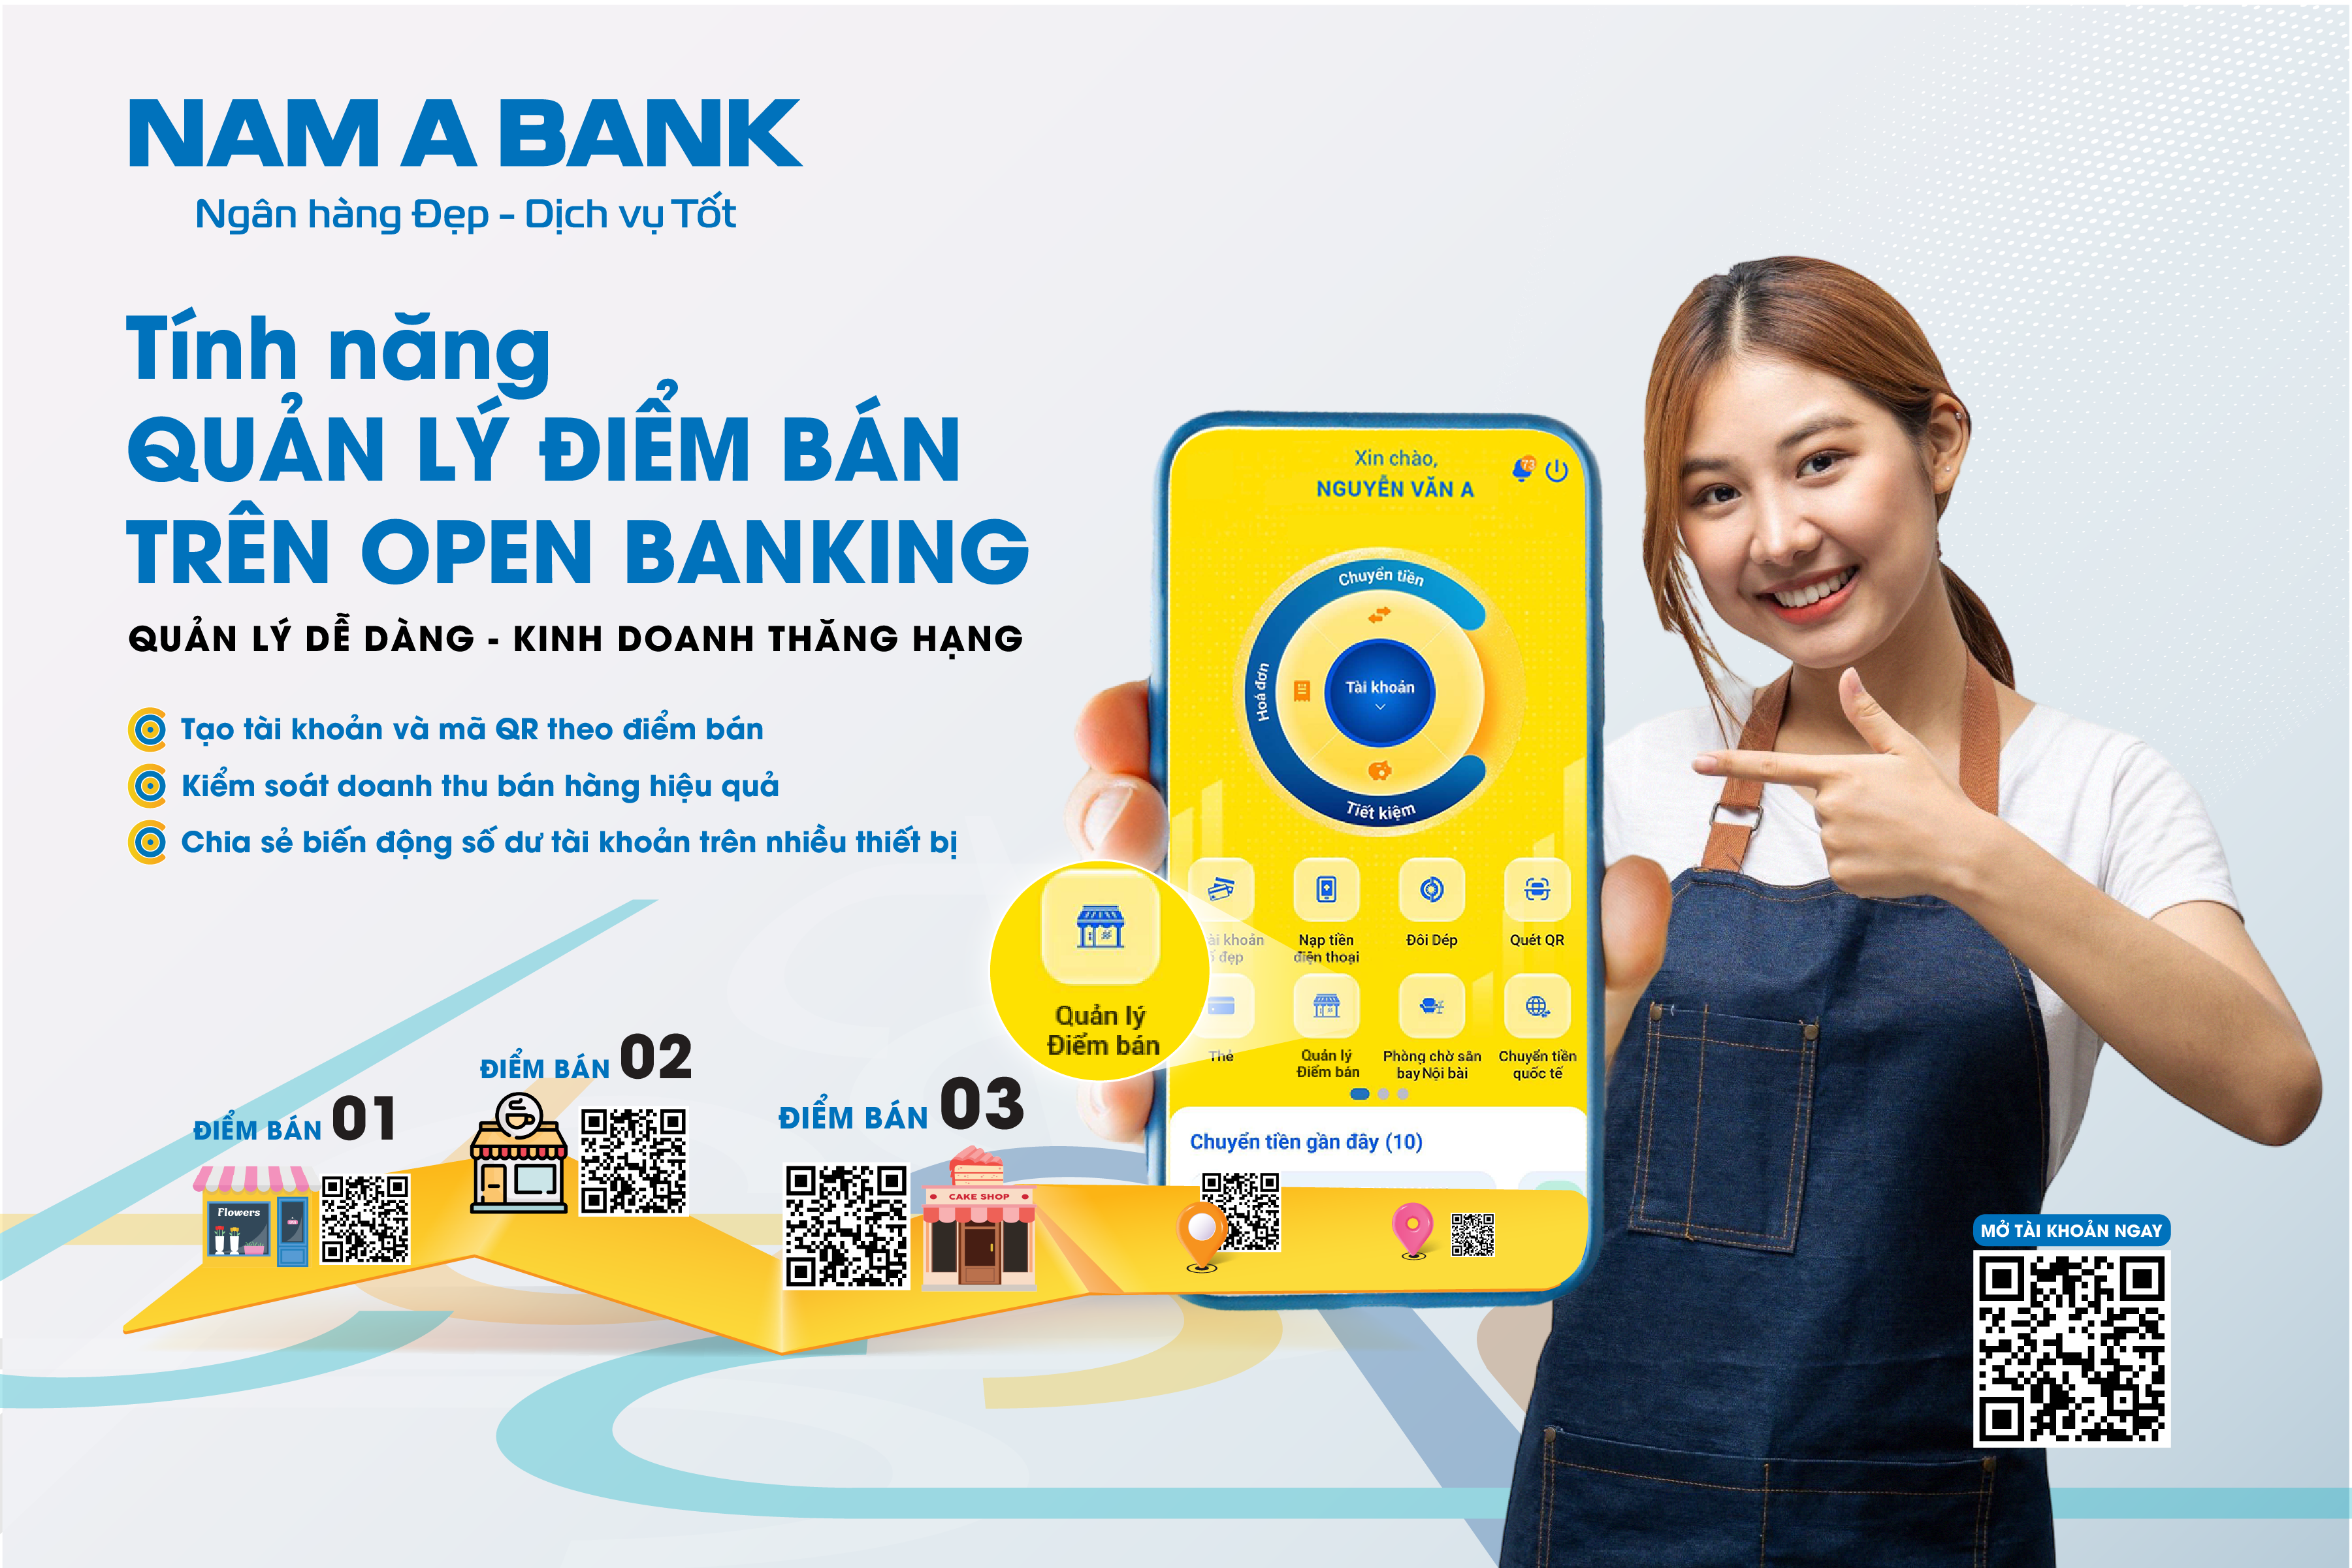 open banking them tinh nang giup chu diem ban quan ly doanh thu hieu qua